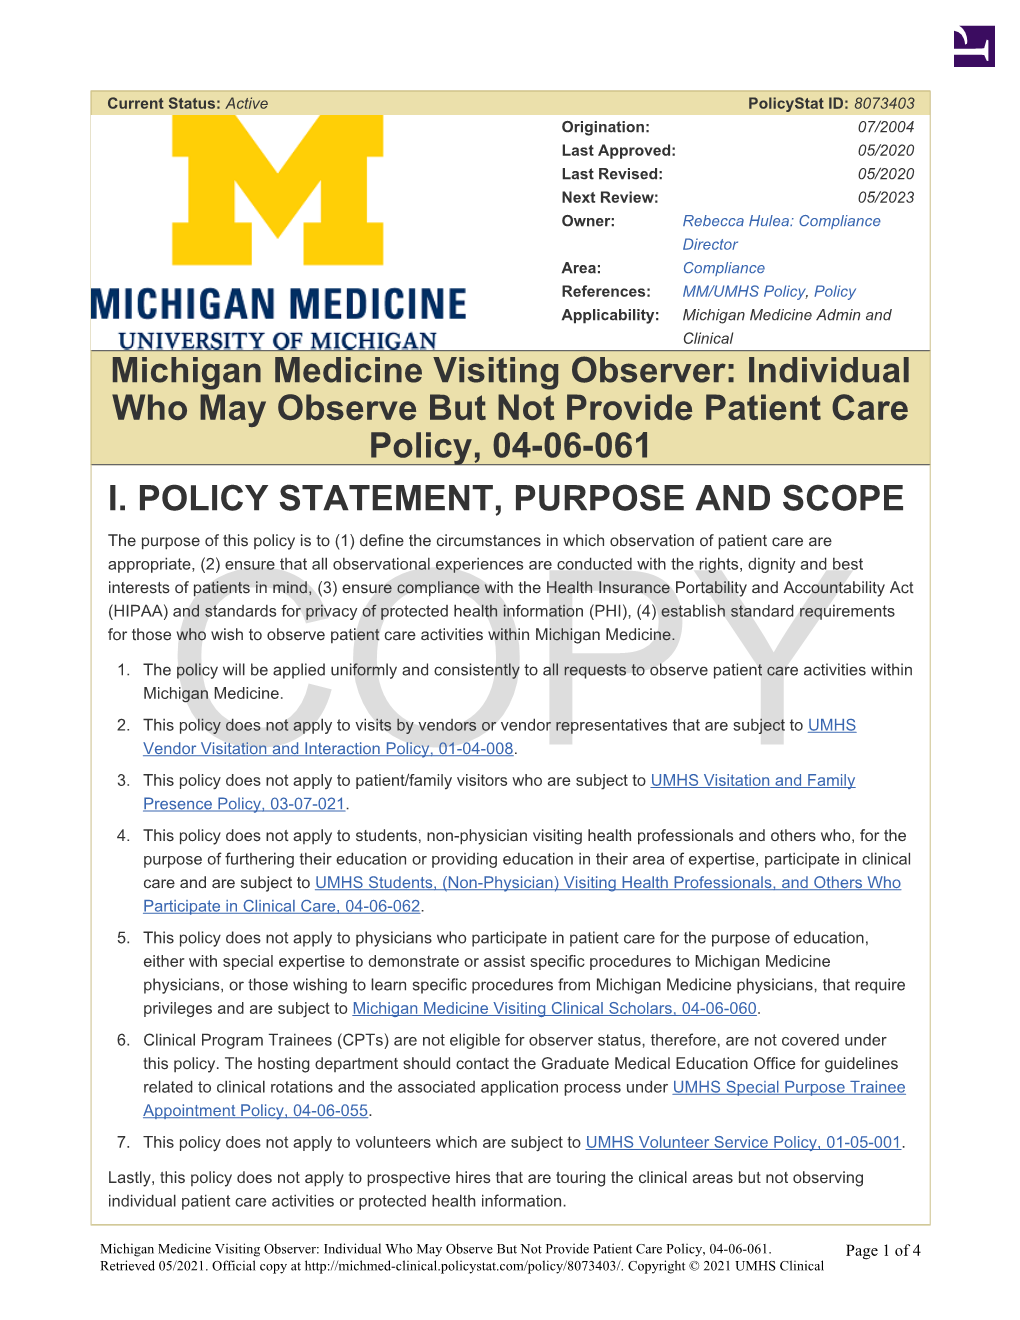 Michigan Medicine Visiting Observer Policy